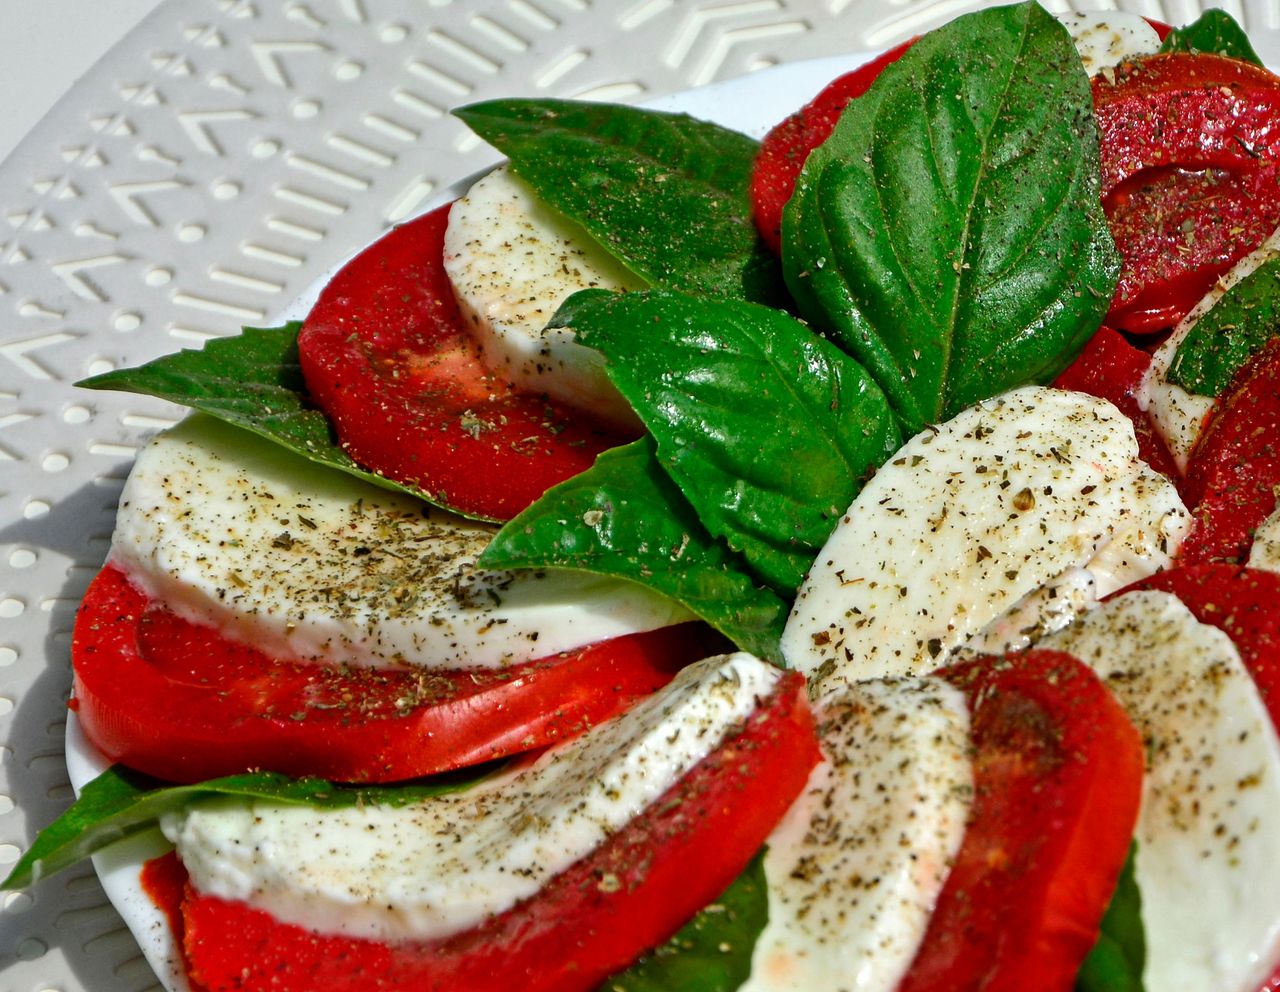 Revolutionising Italian classic: Strawberry caprese salad steals the show